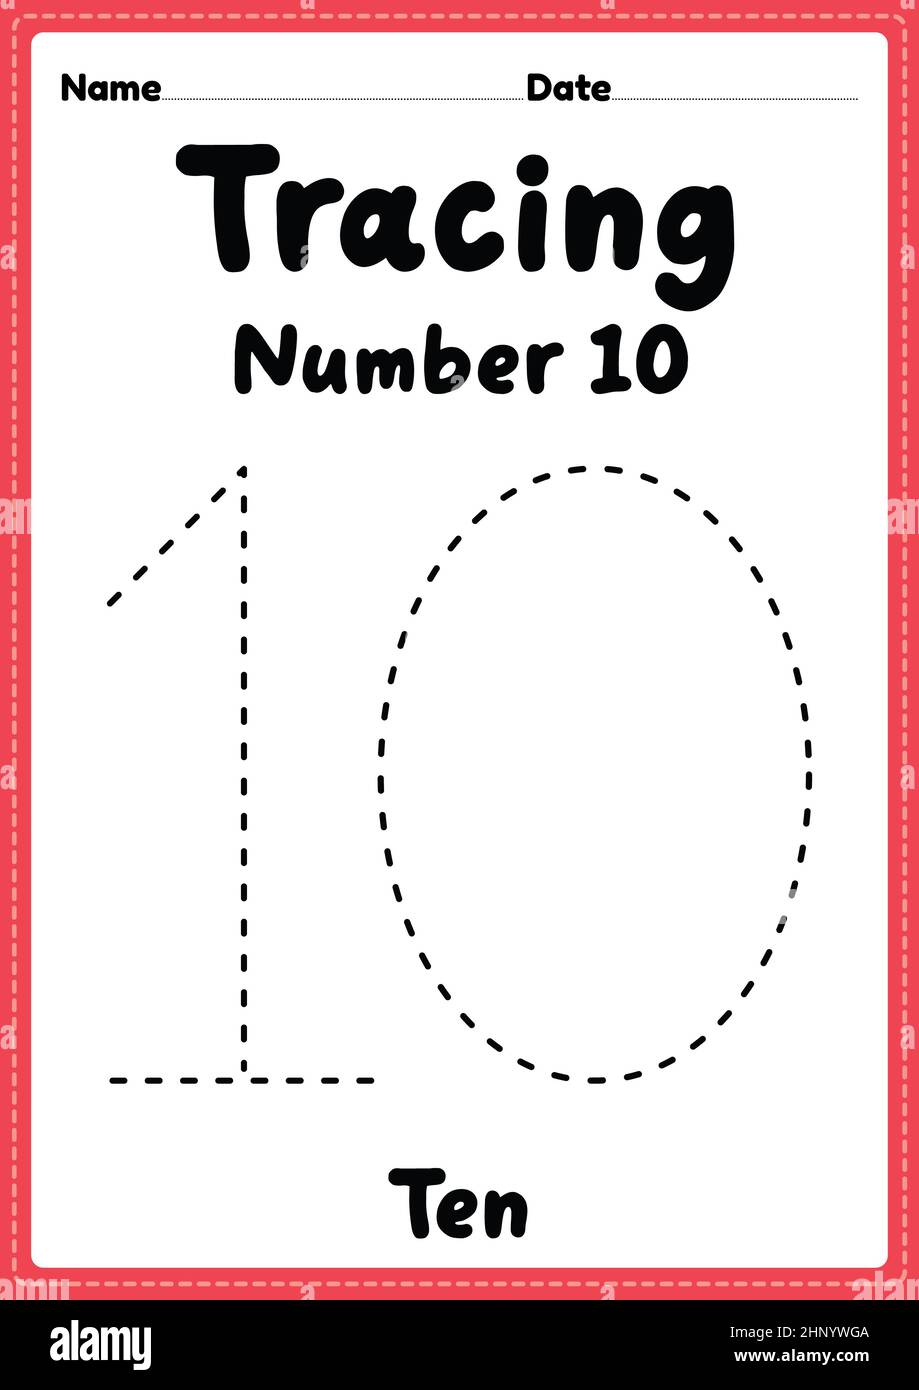 Tracing number 10 worksheet for kindergarten, preschool and Montessori kids for handwriting practice activities in a printable page. Stock Photo